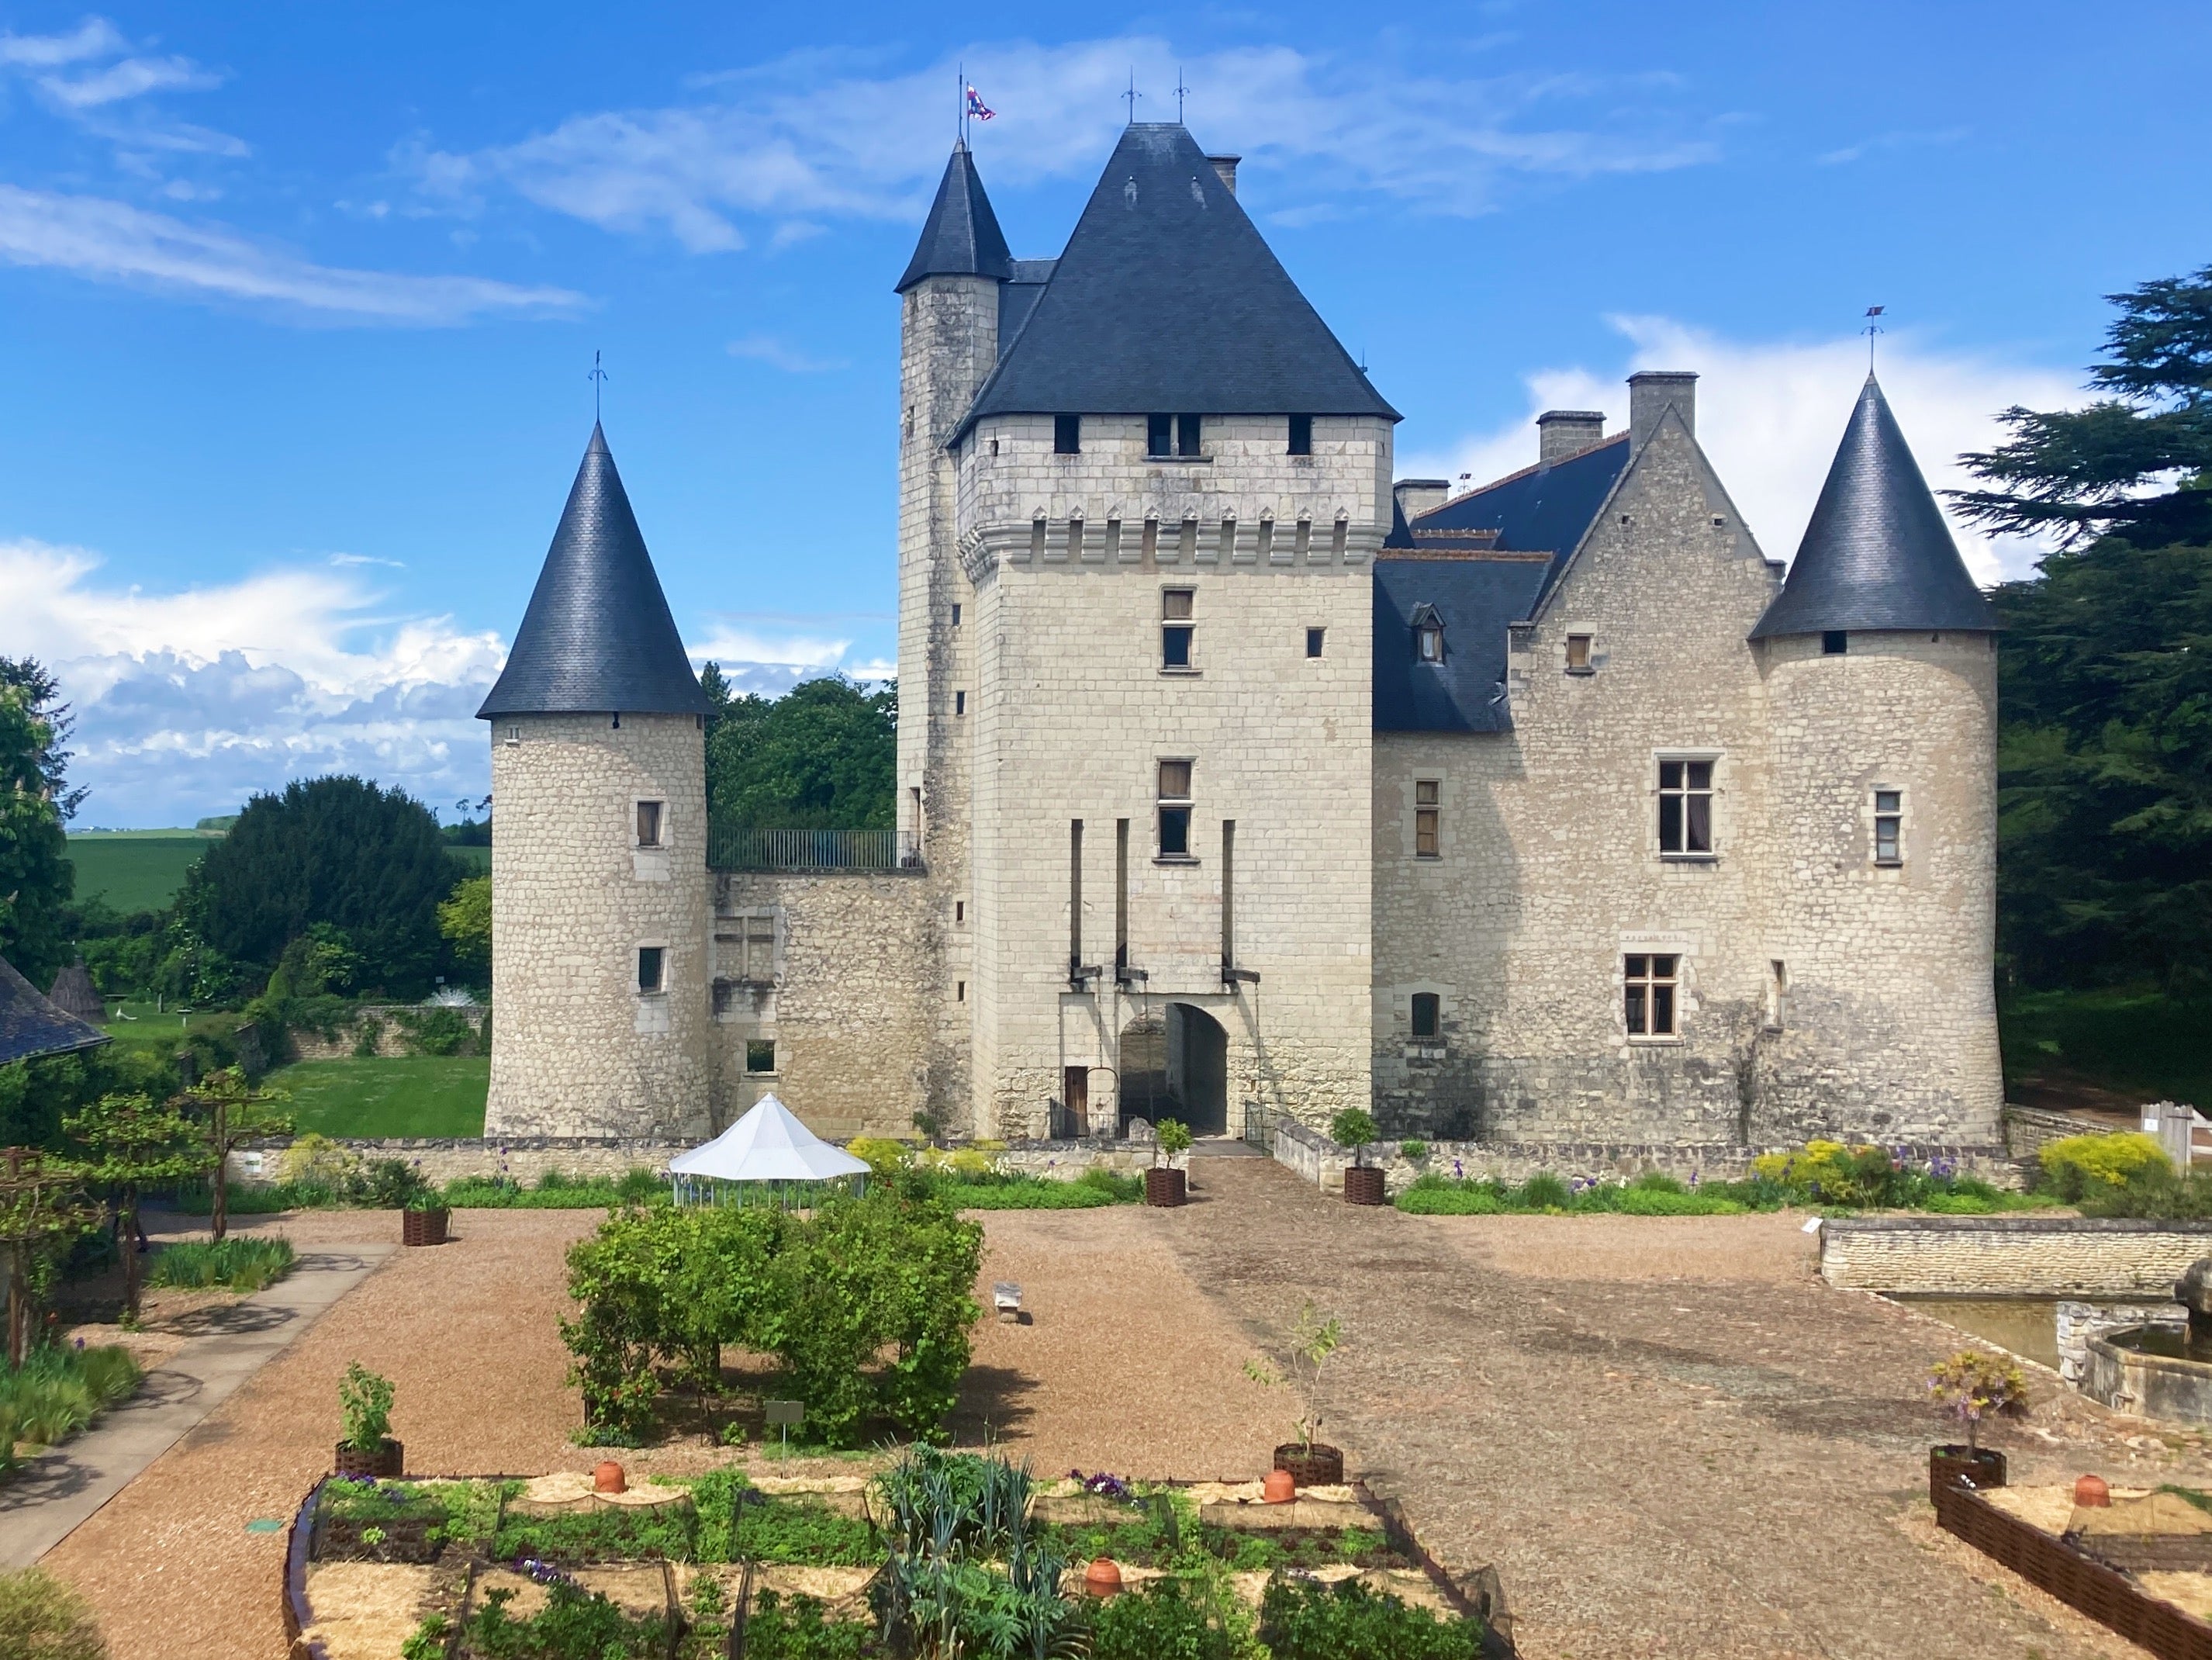 Chateau du Rivau, a smaller – but just as impressive – chateau